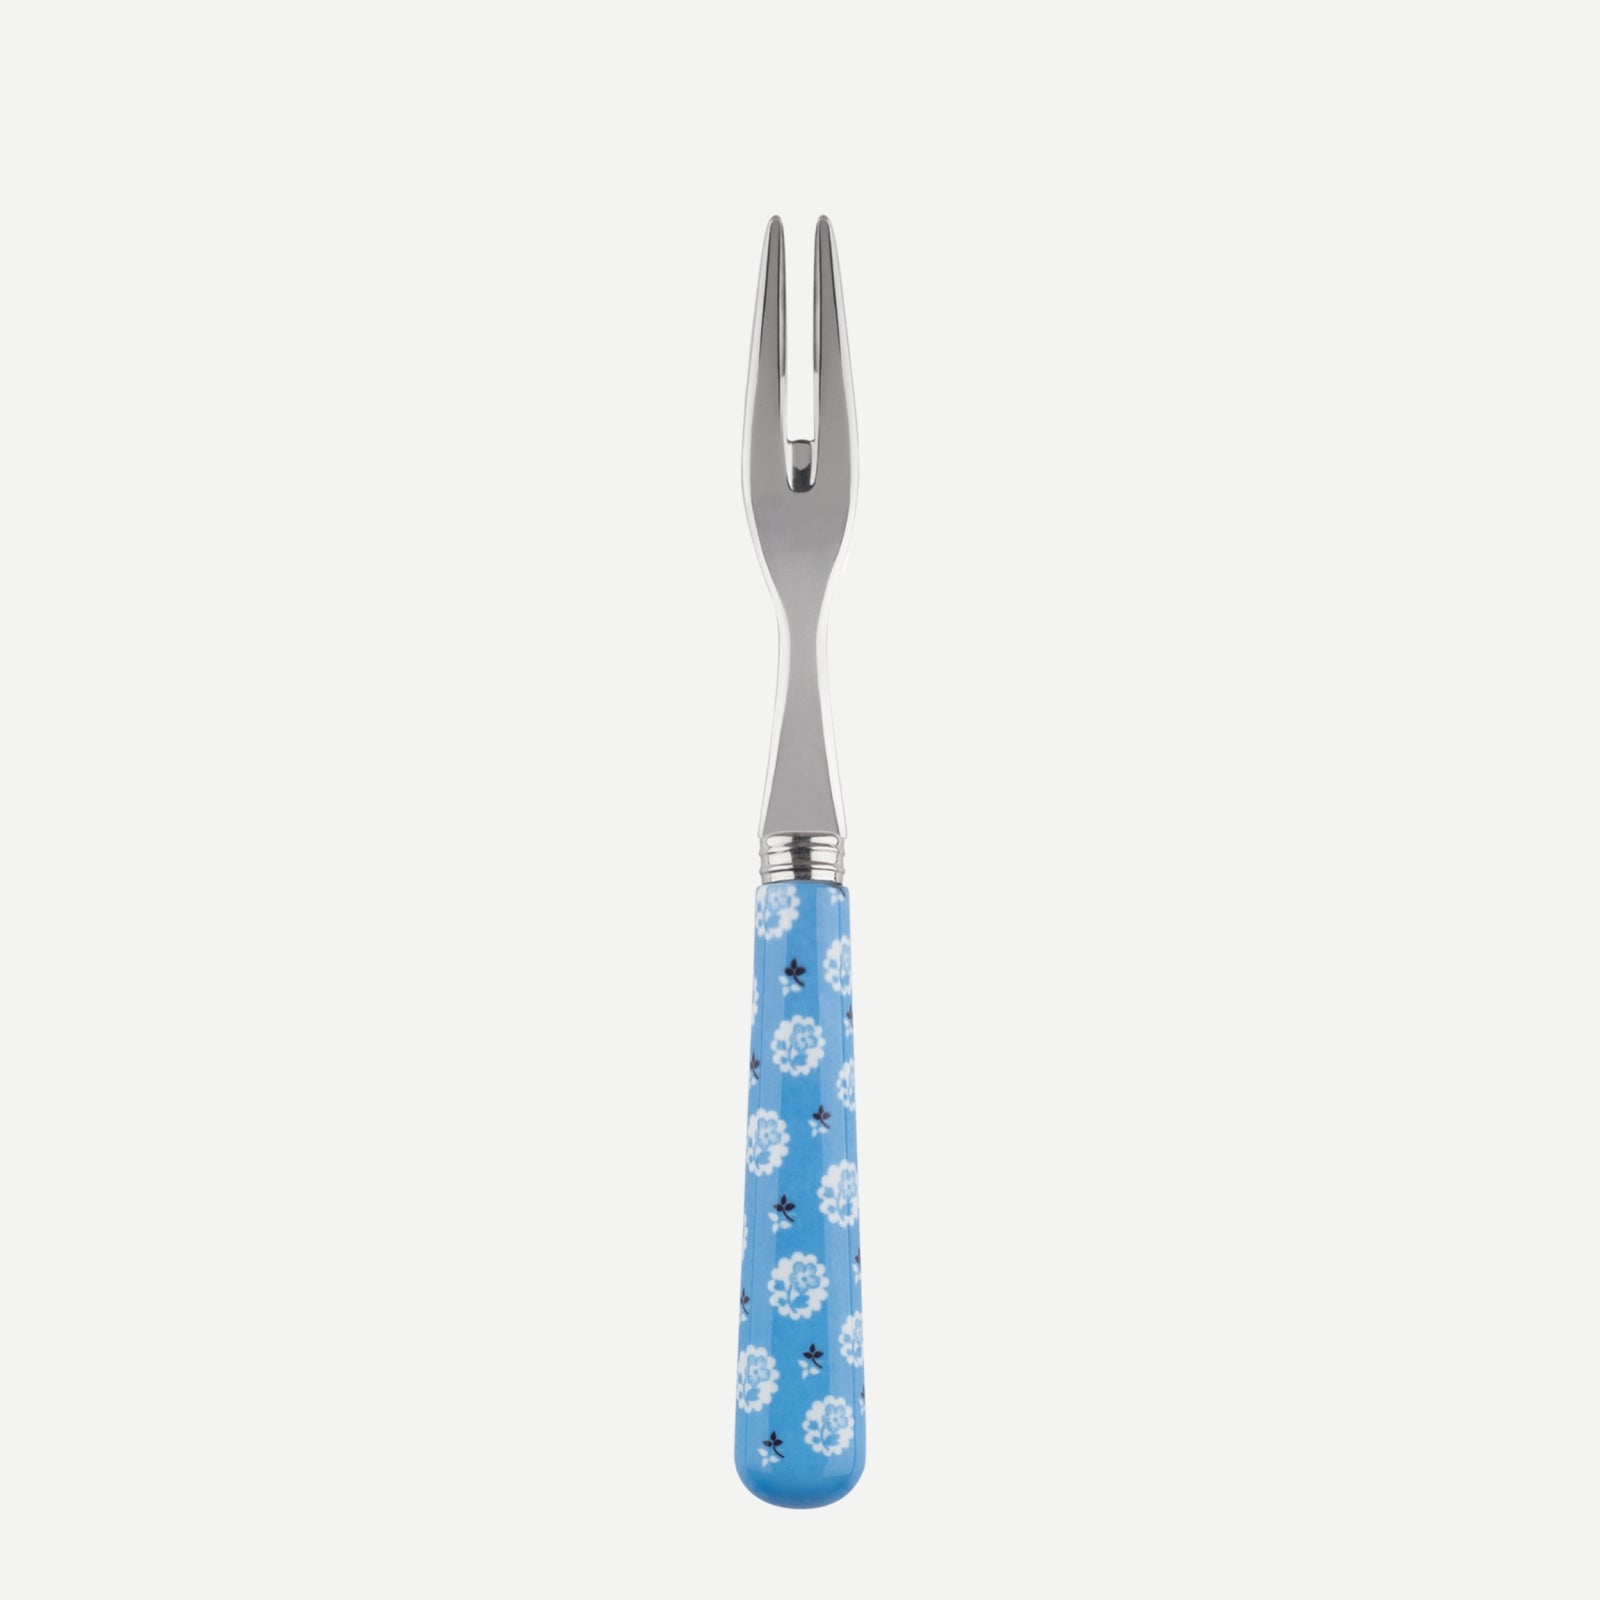 Cocktail fork - Provencal - Light blue